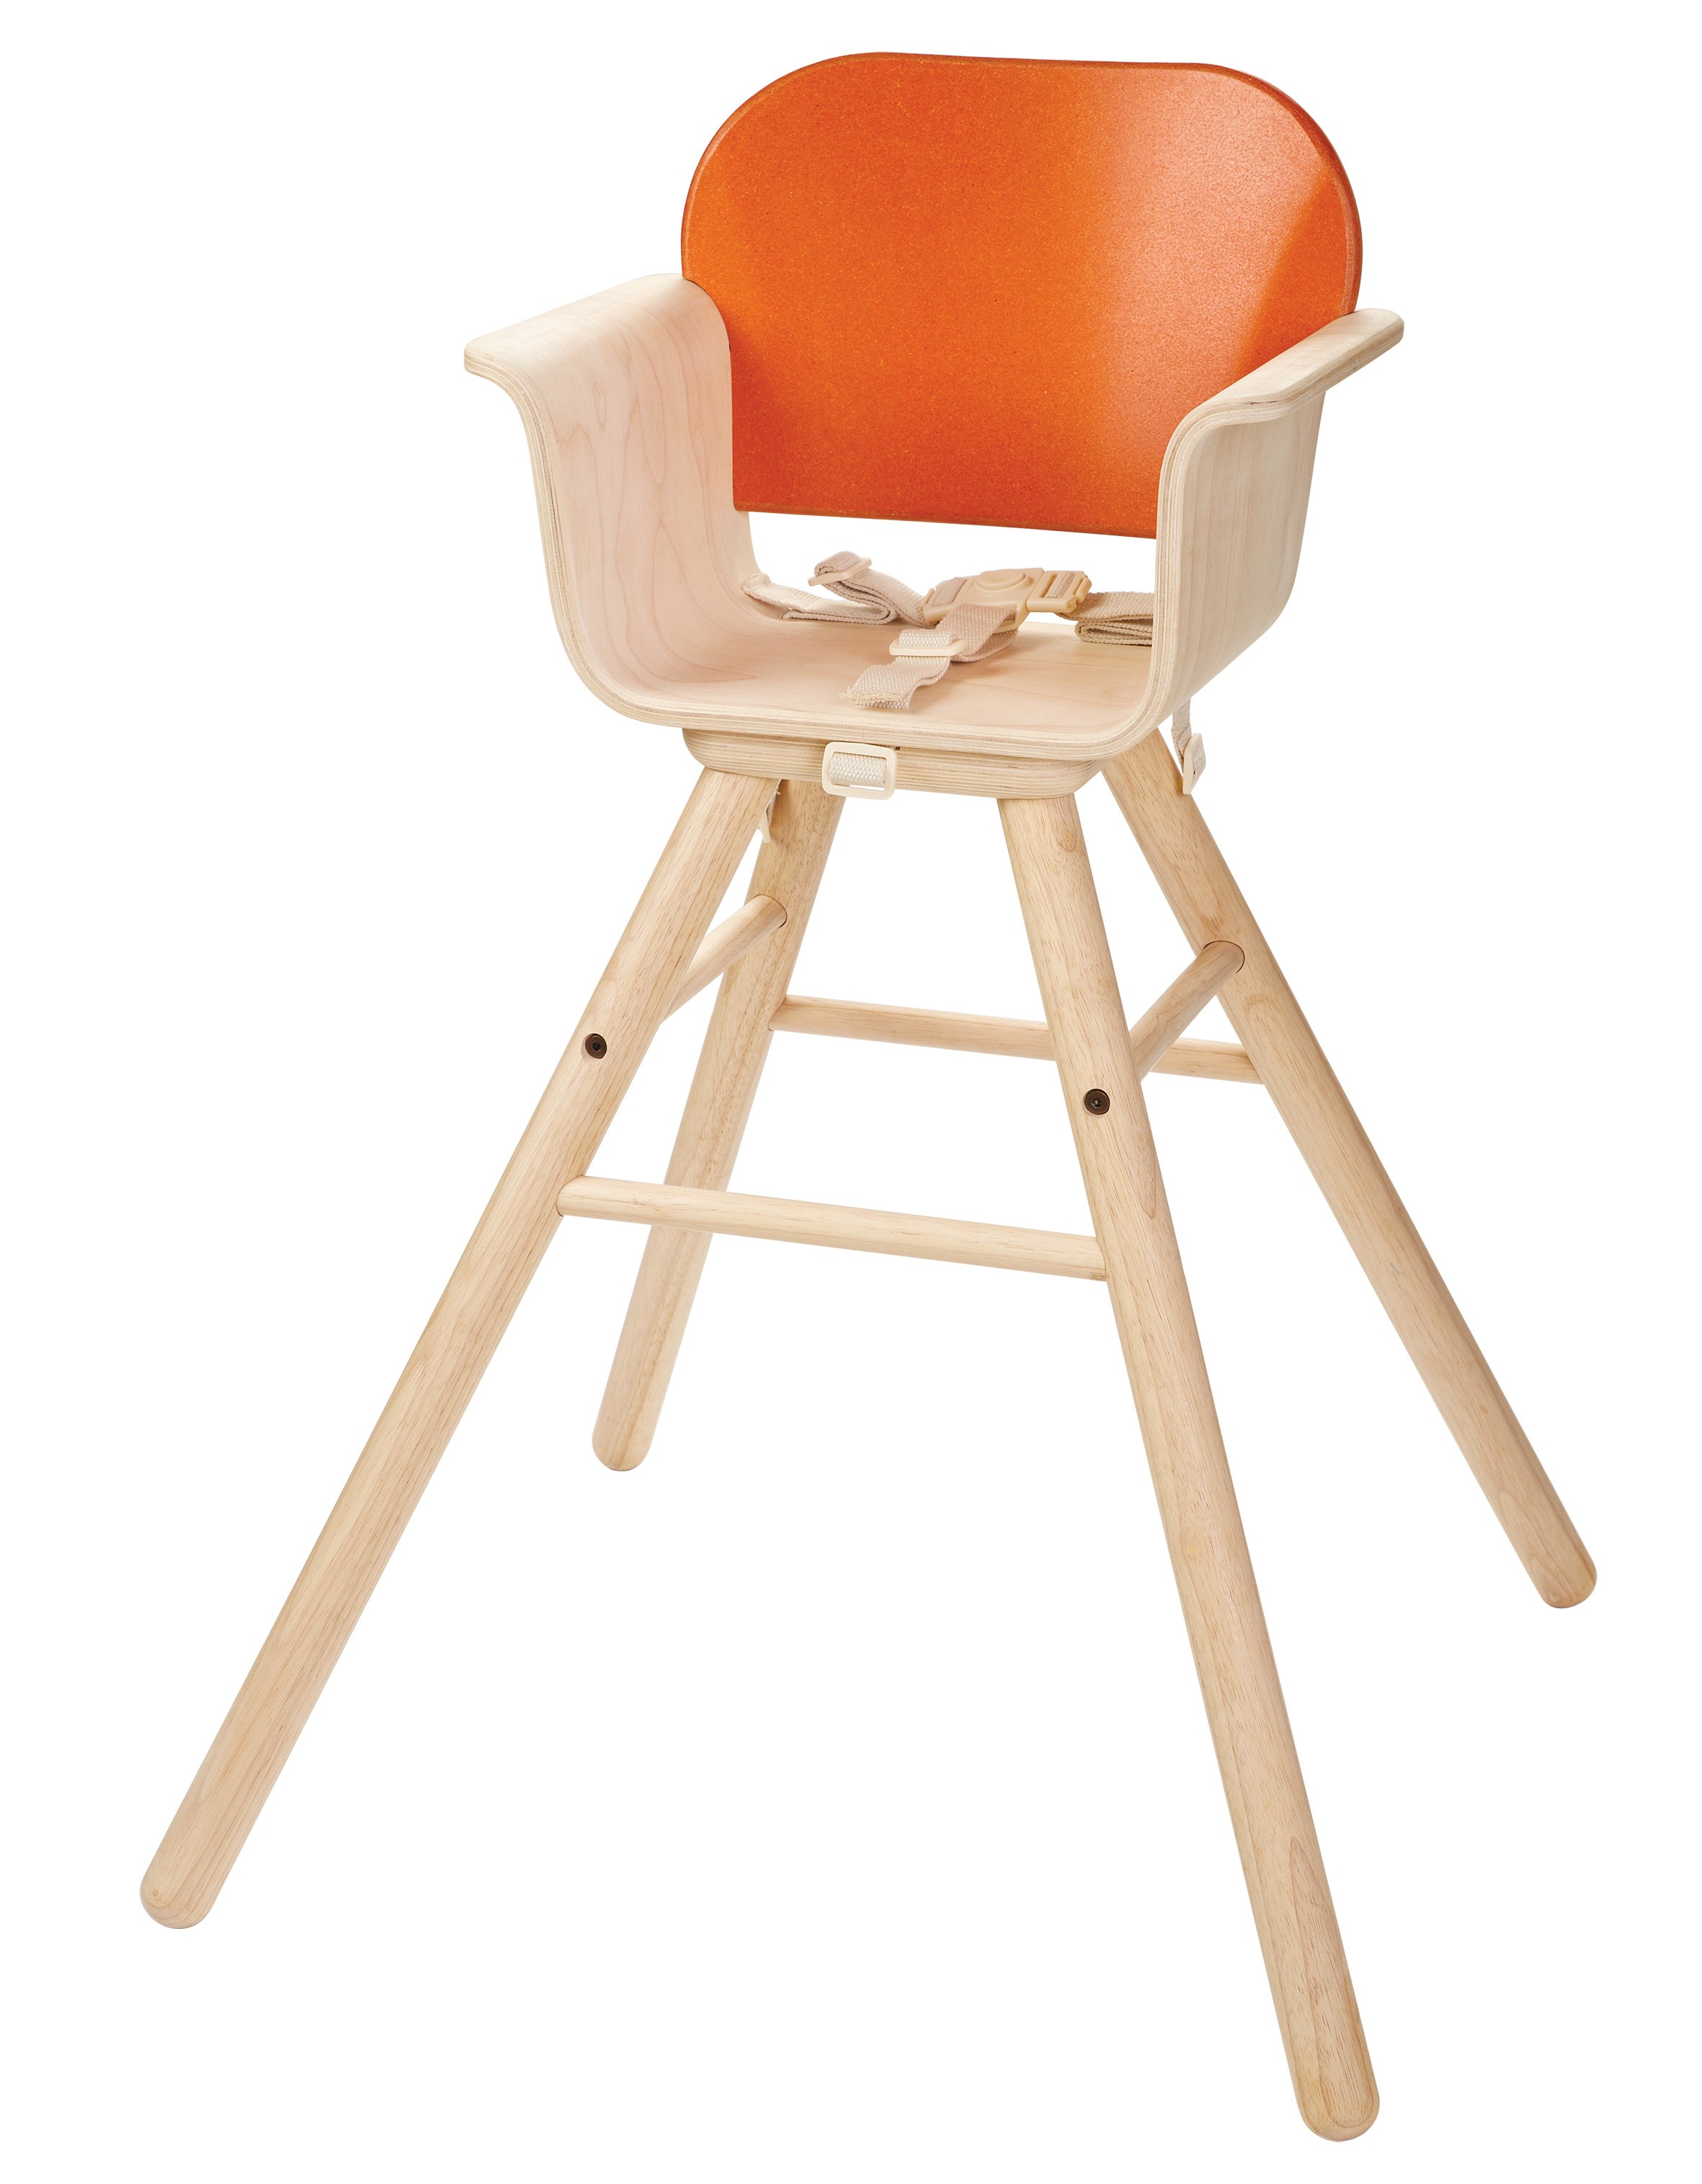 Plan Toys Orange High Chair